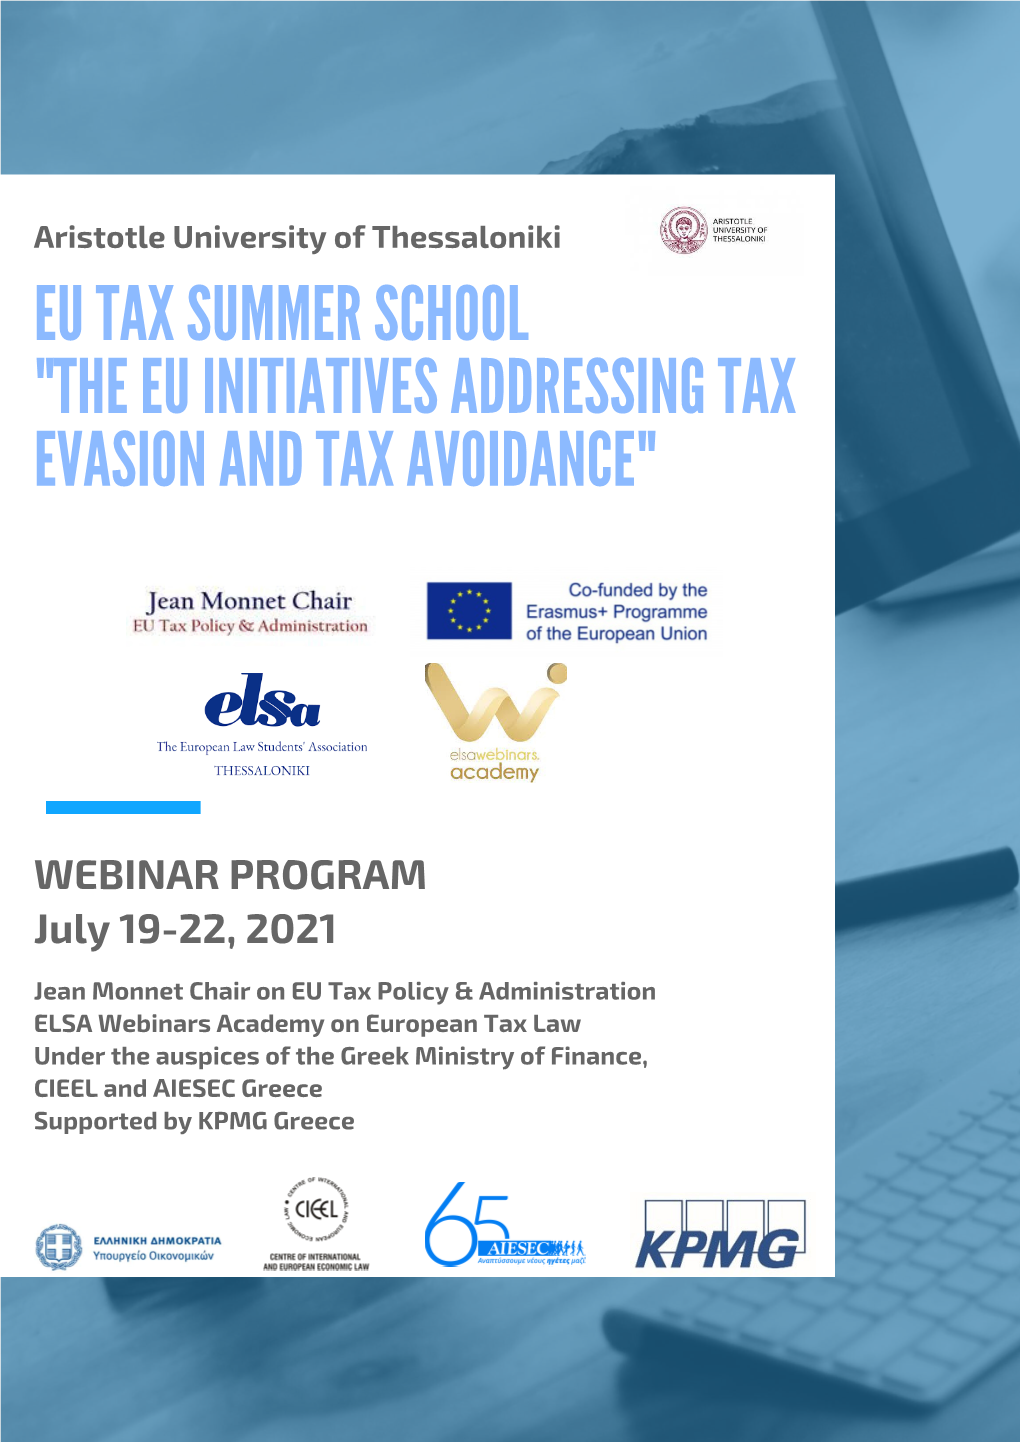 Eu Tax Summer School "The Eu Initiatives Addressing Tax Evasion and Tax Avoidance"